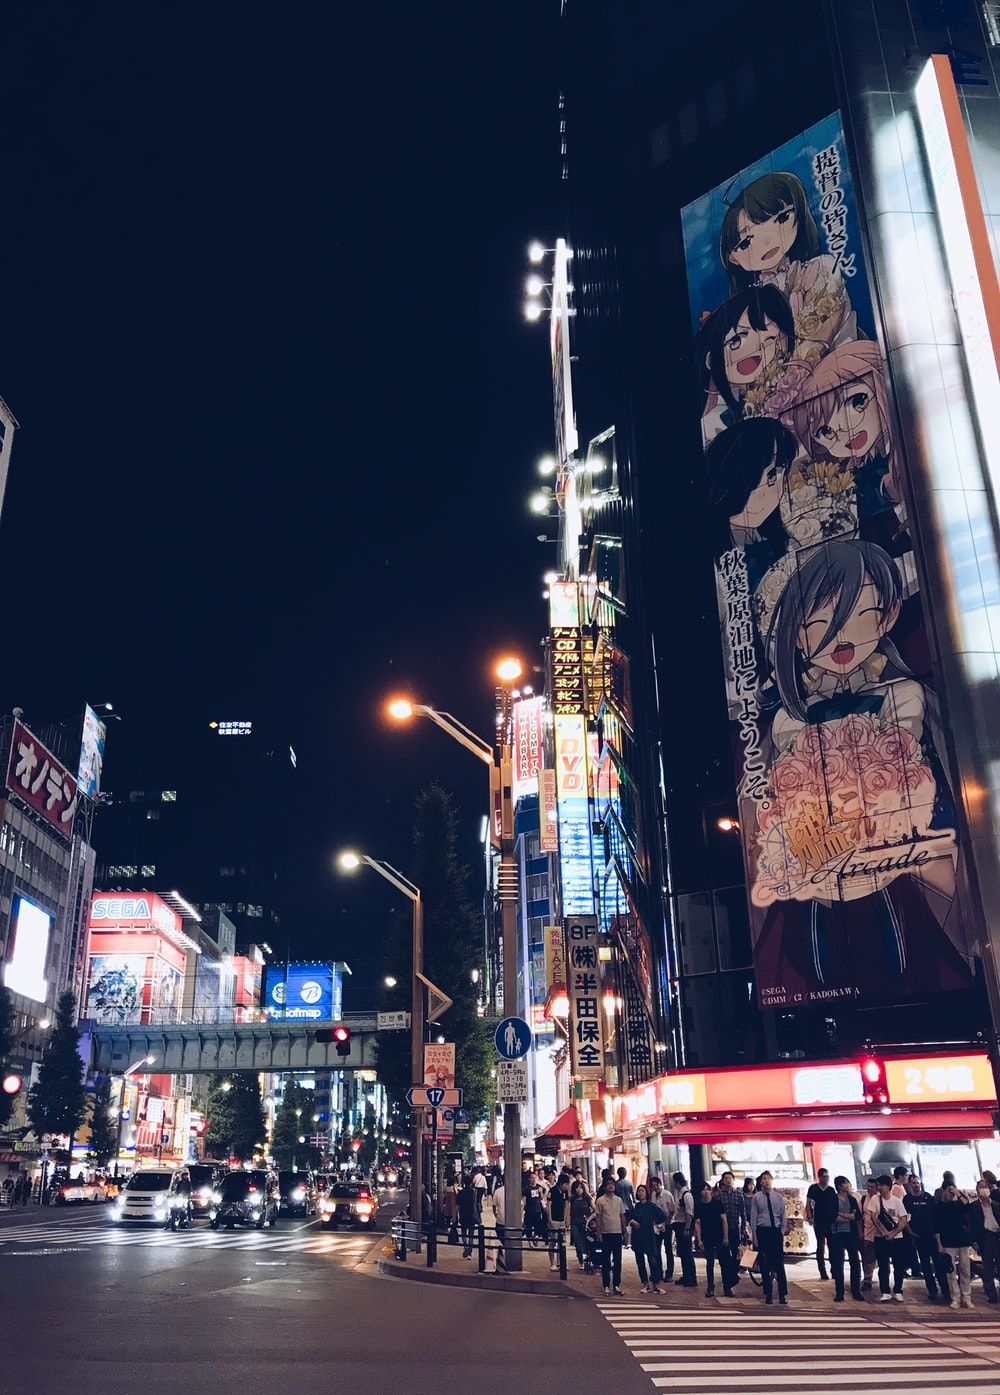 Japan Night Picture. Download Free Image